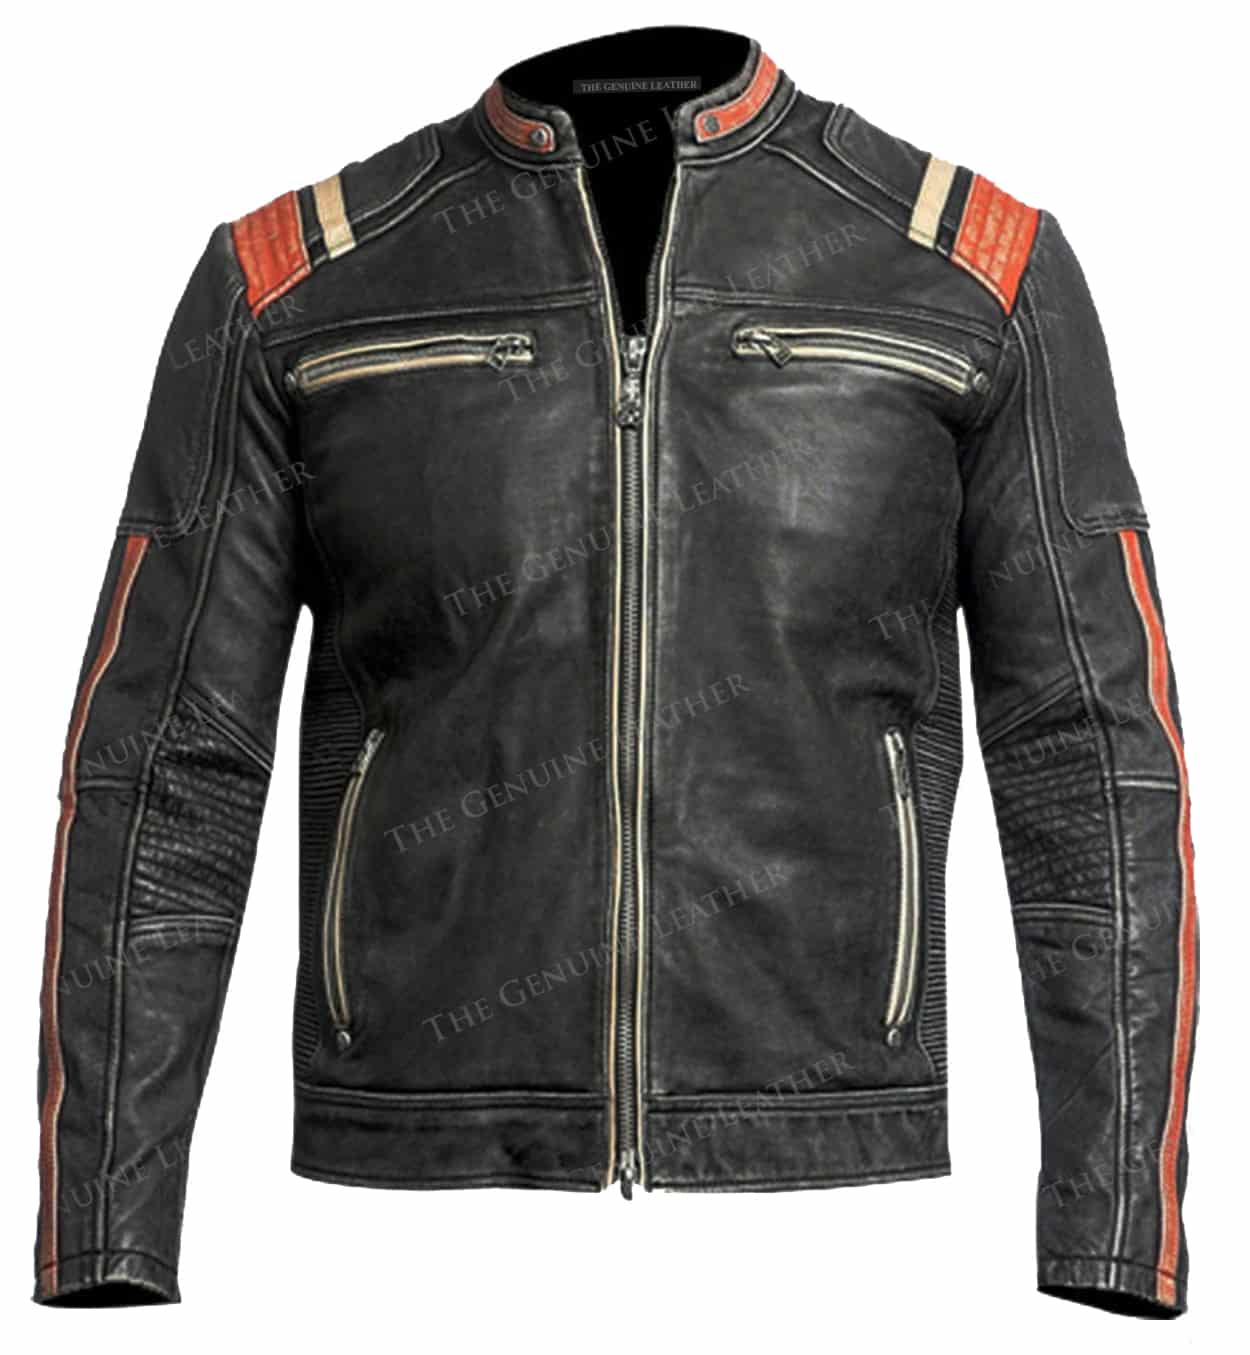 Vintage Cafe Racer Motorcycle Leather Jacket | The Genuine ...